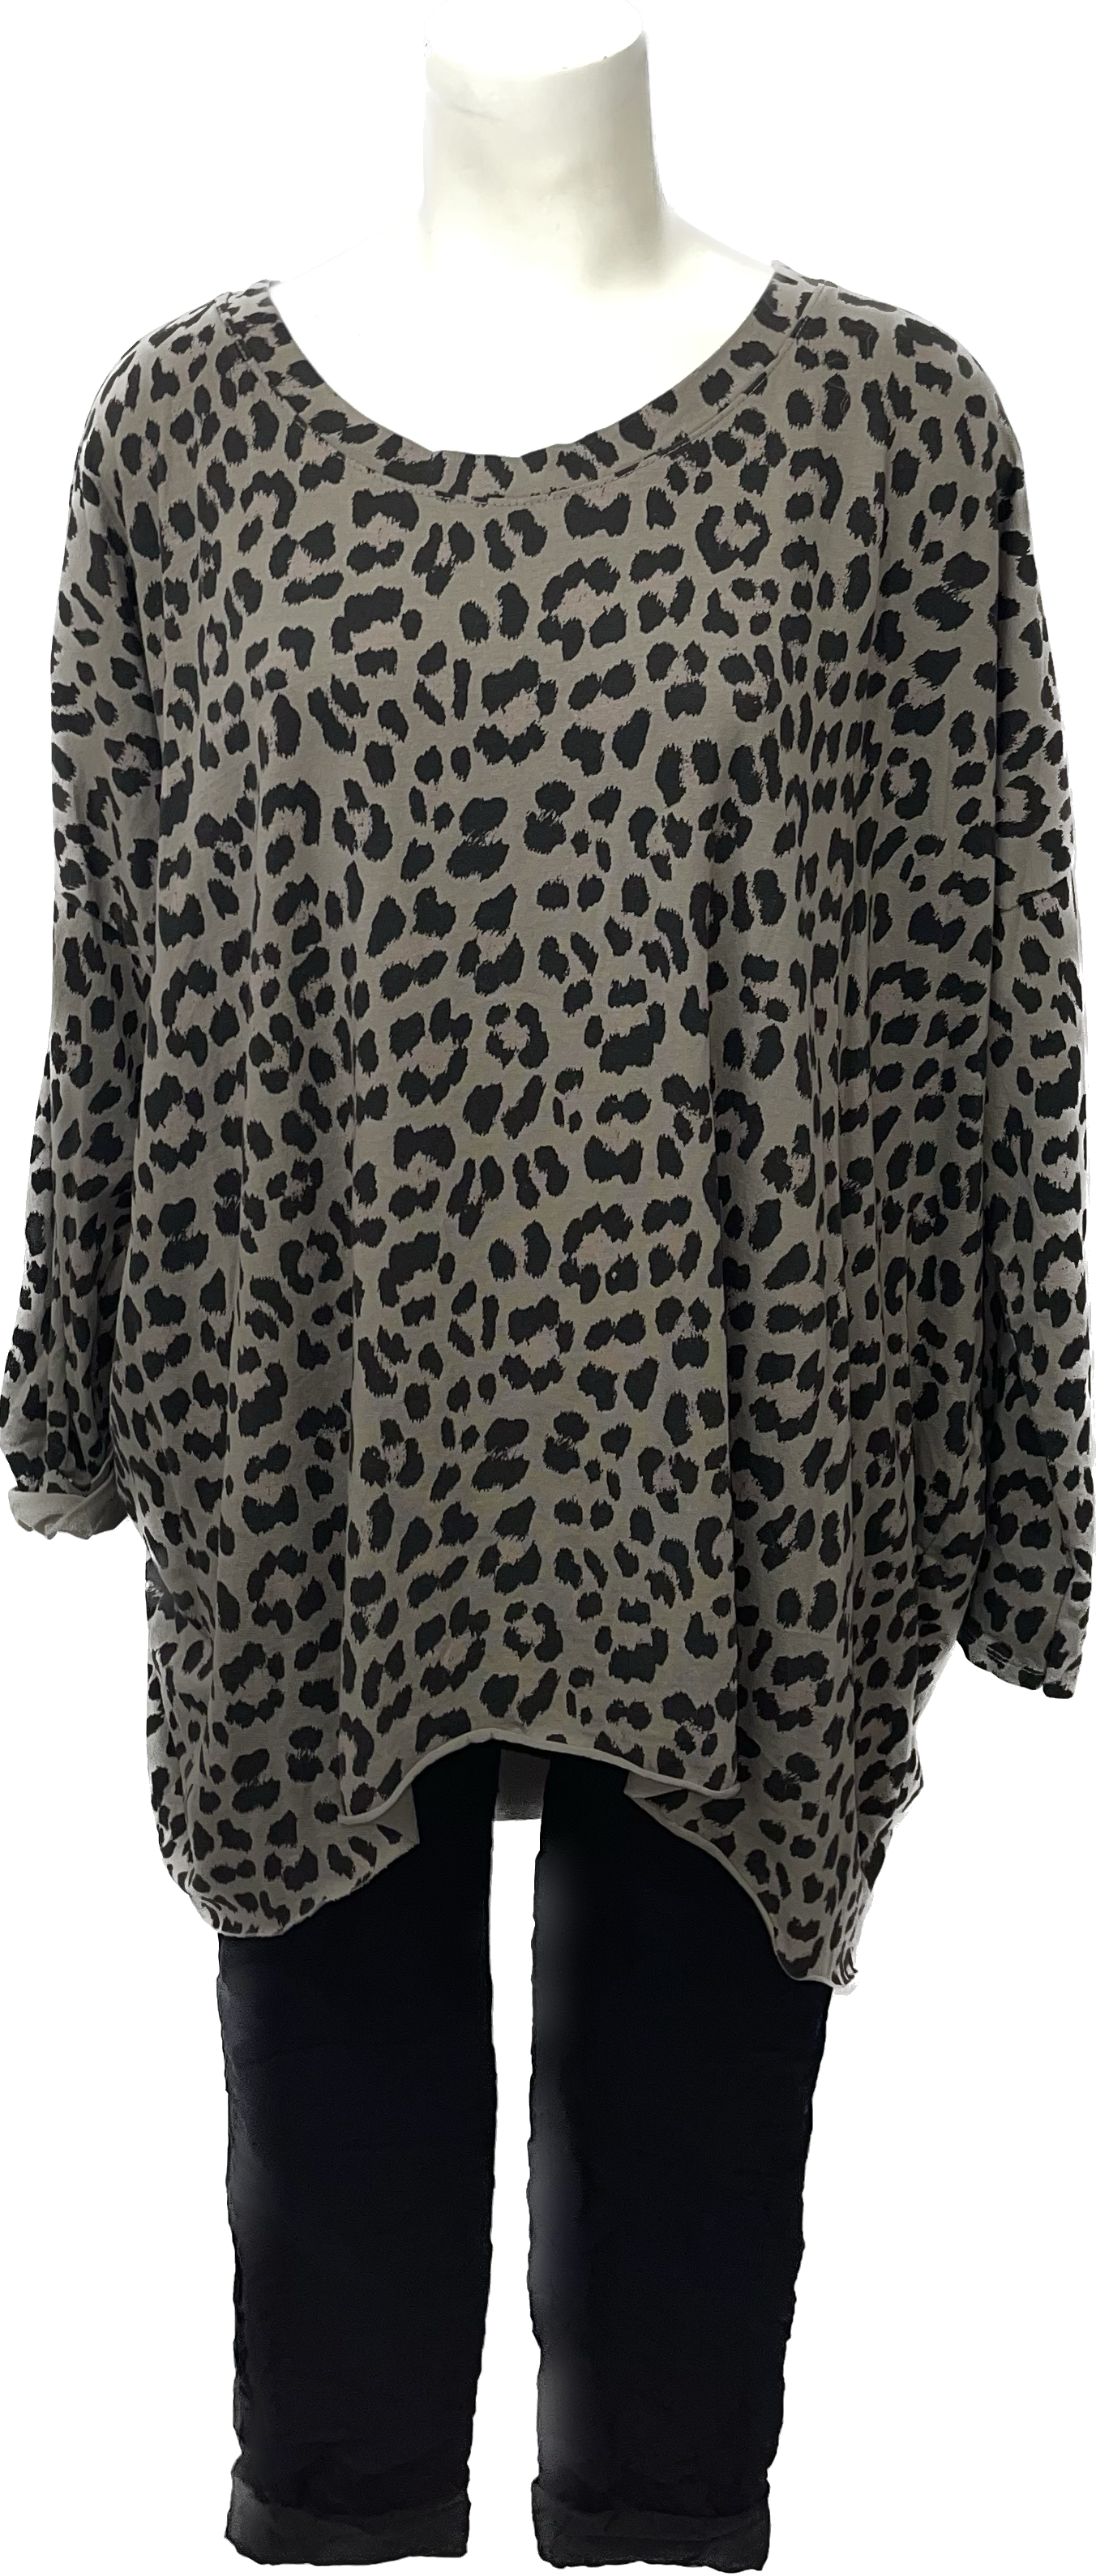 Cheetah Print Tunic